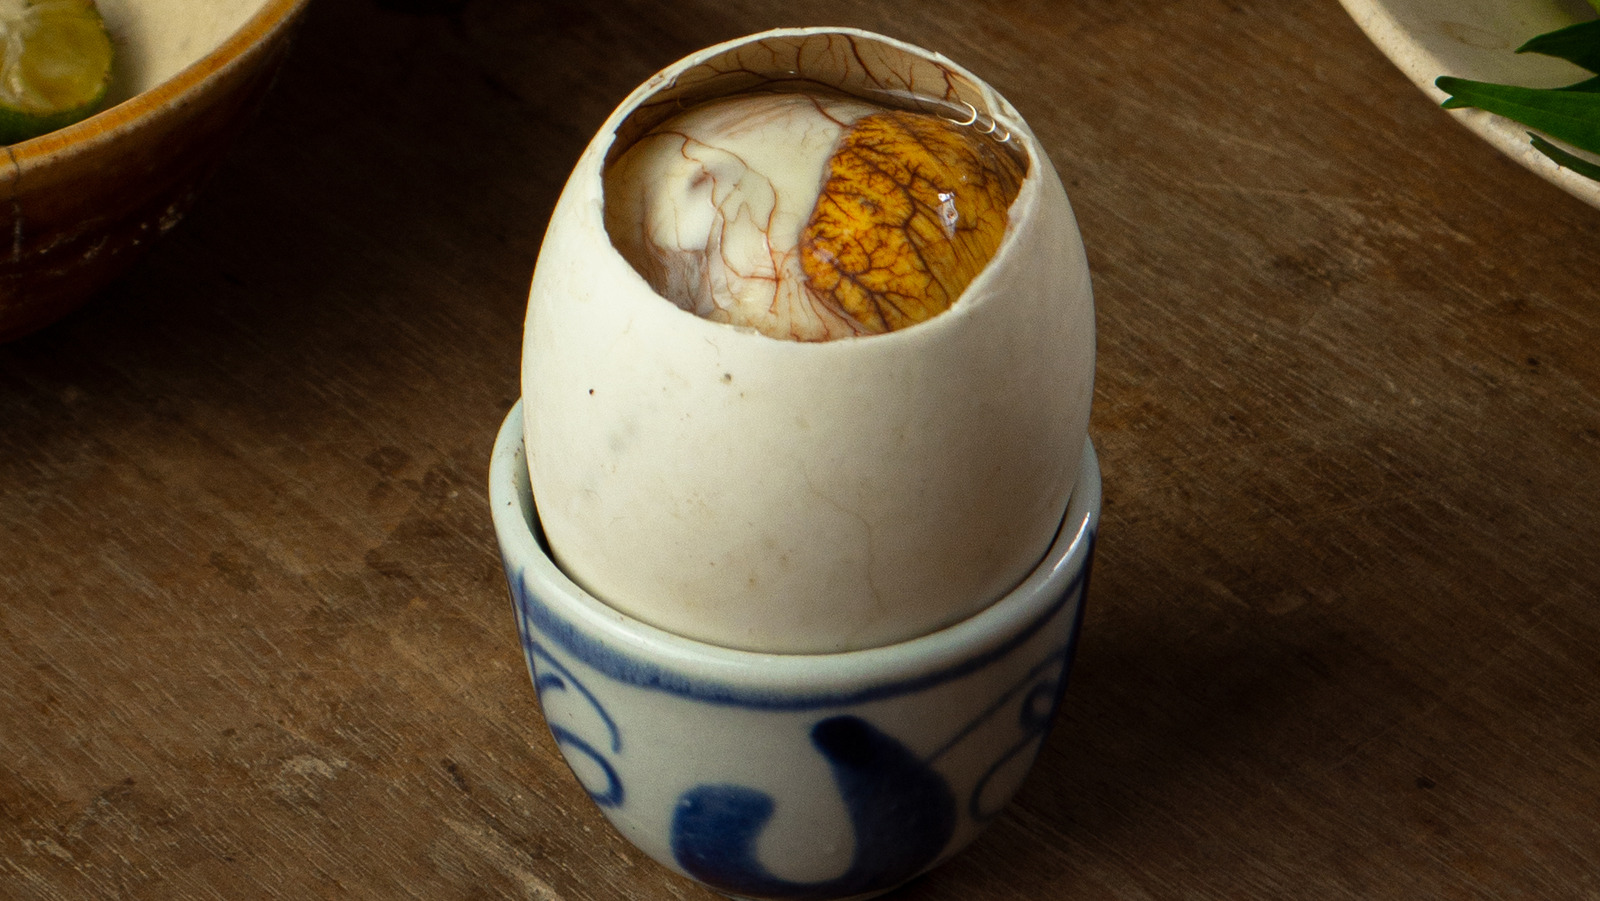 Duck eggs (limited availability)